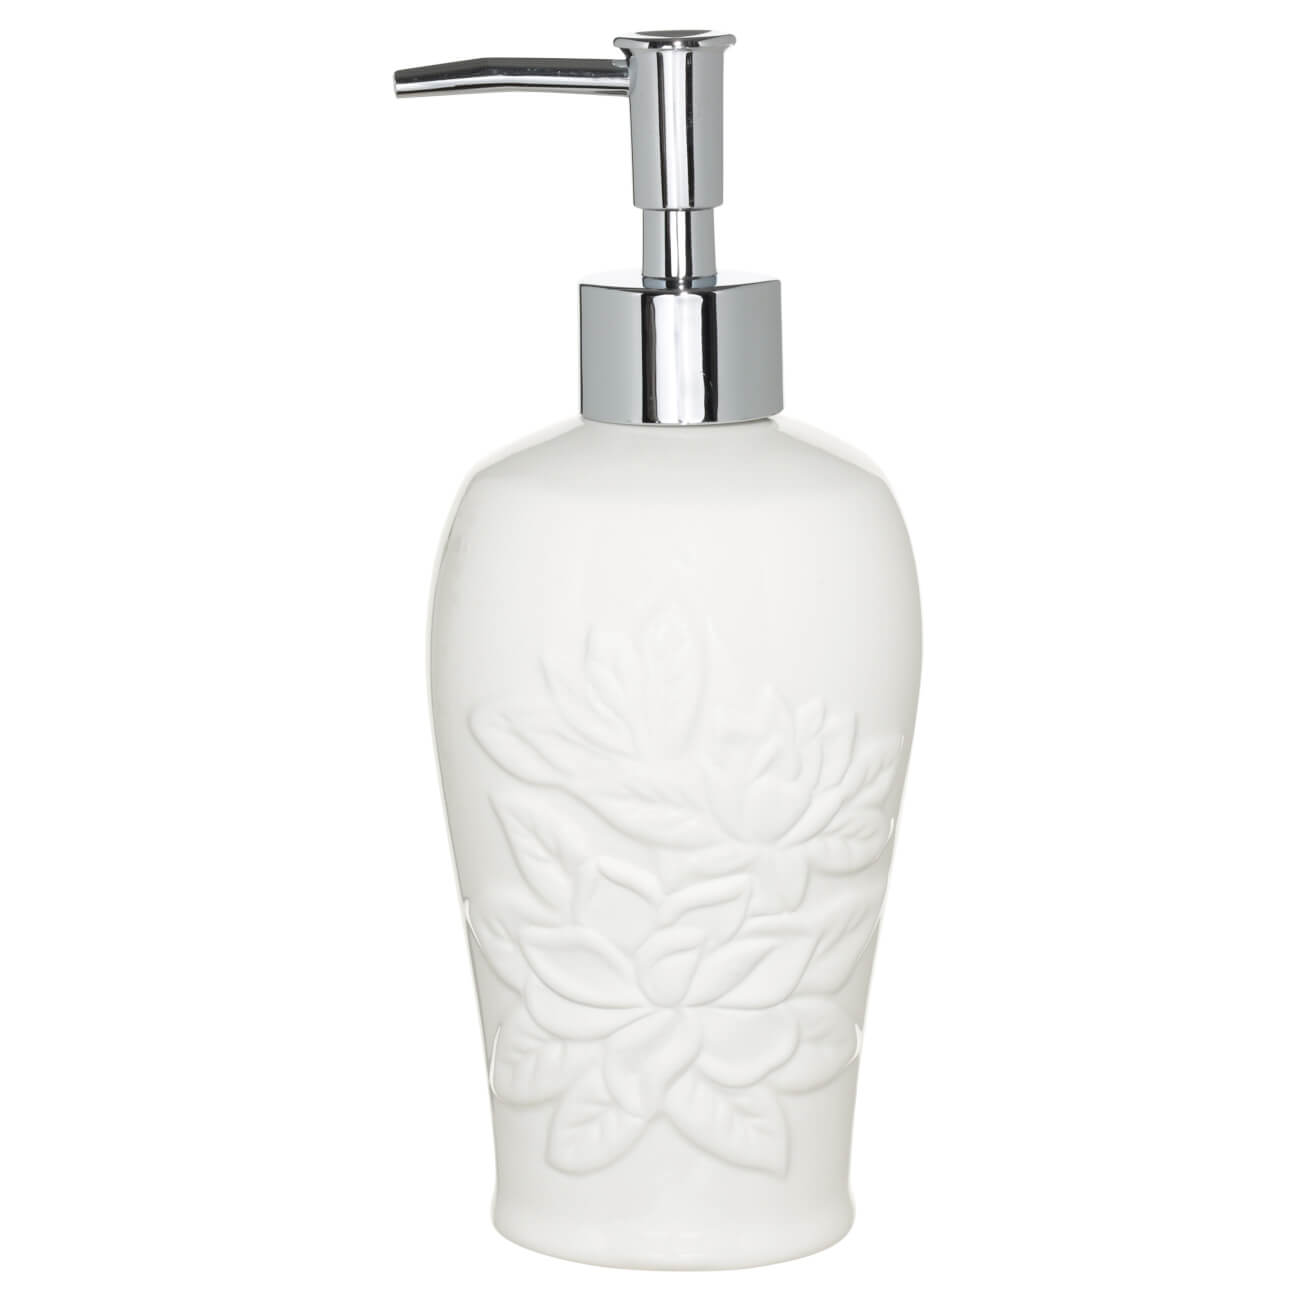 Диспенсер для жидкого мыла, 360 мл, керамика/пластик, белый, Shower Lotus поднос для ванной 36х13 см керамика белый shower lotus